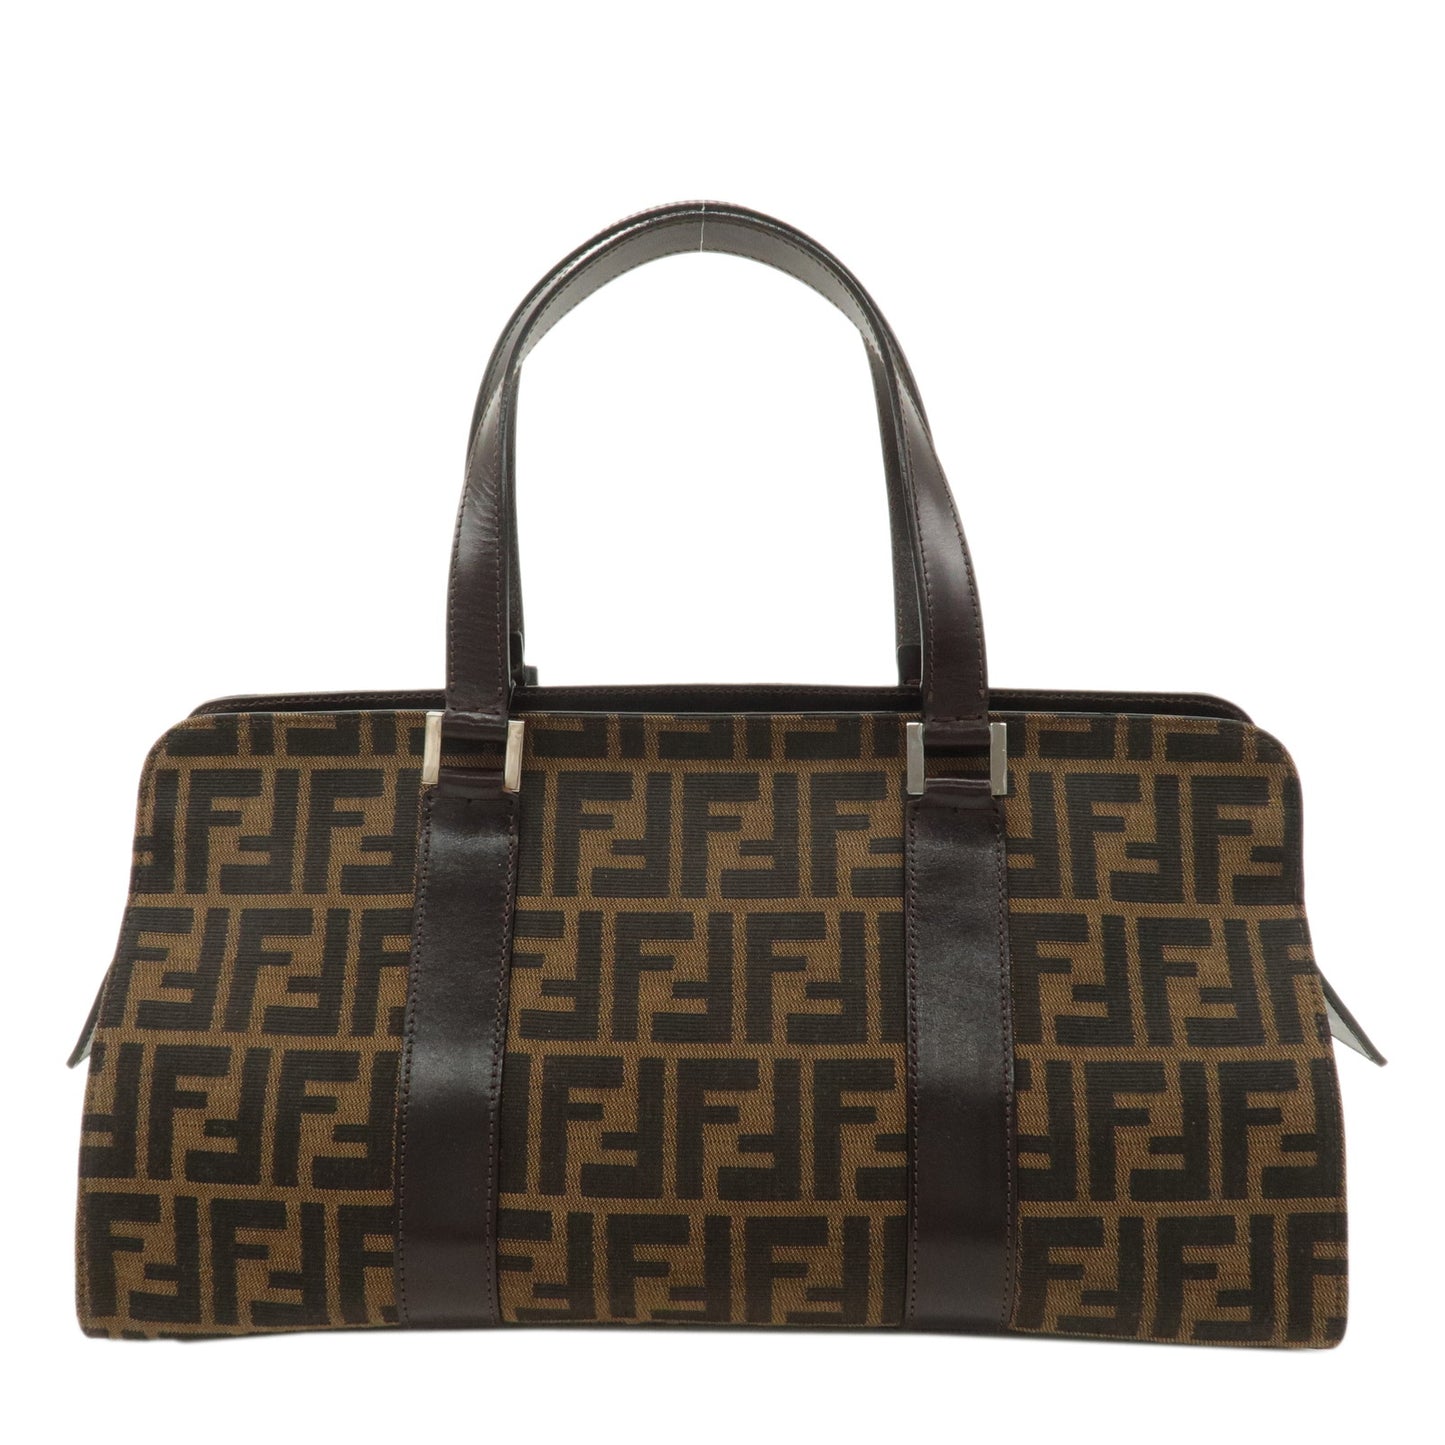 FENDI-Zucca-Canvas-Leather-Handbag-Brown-Black-16309